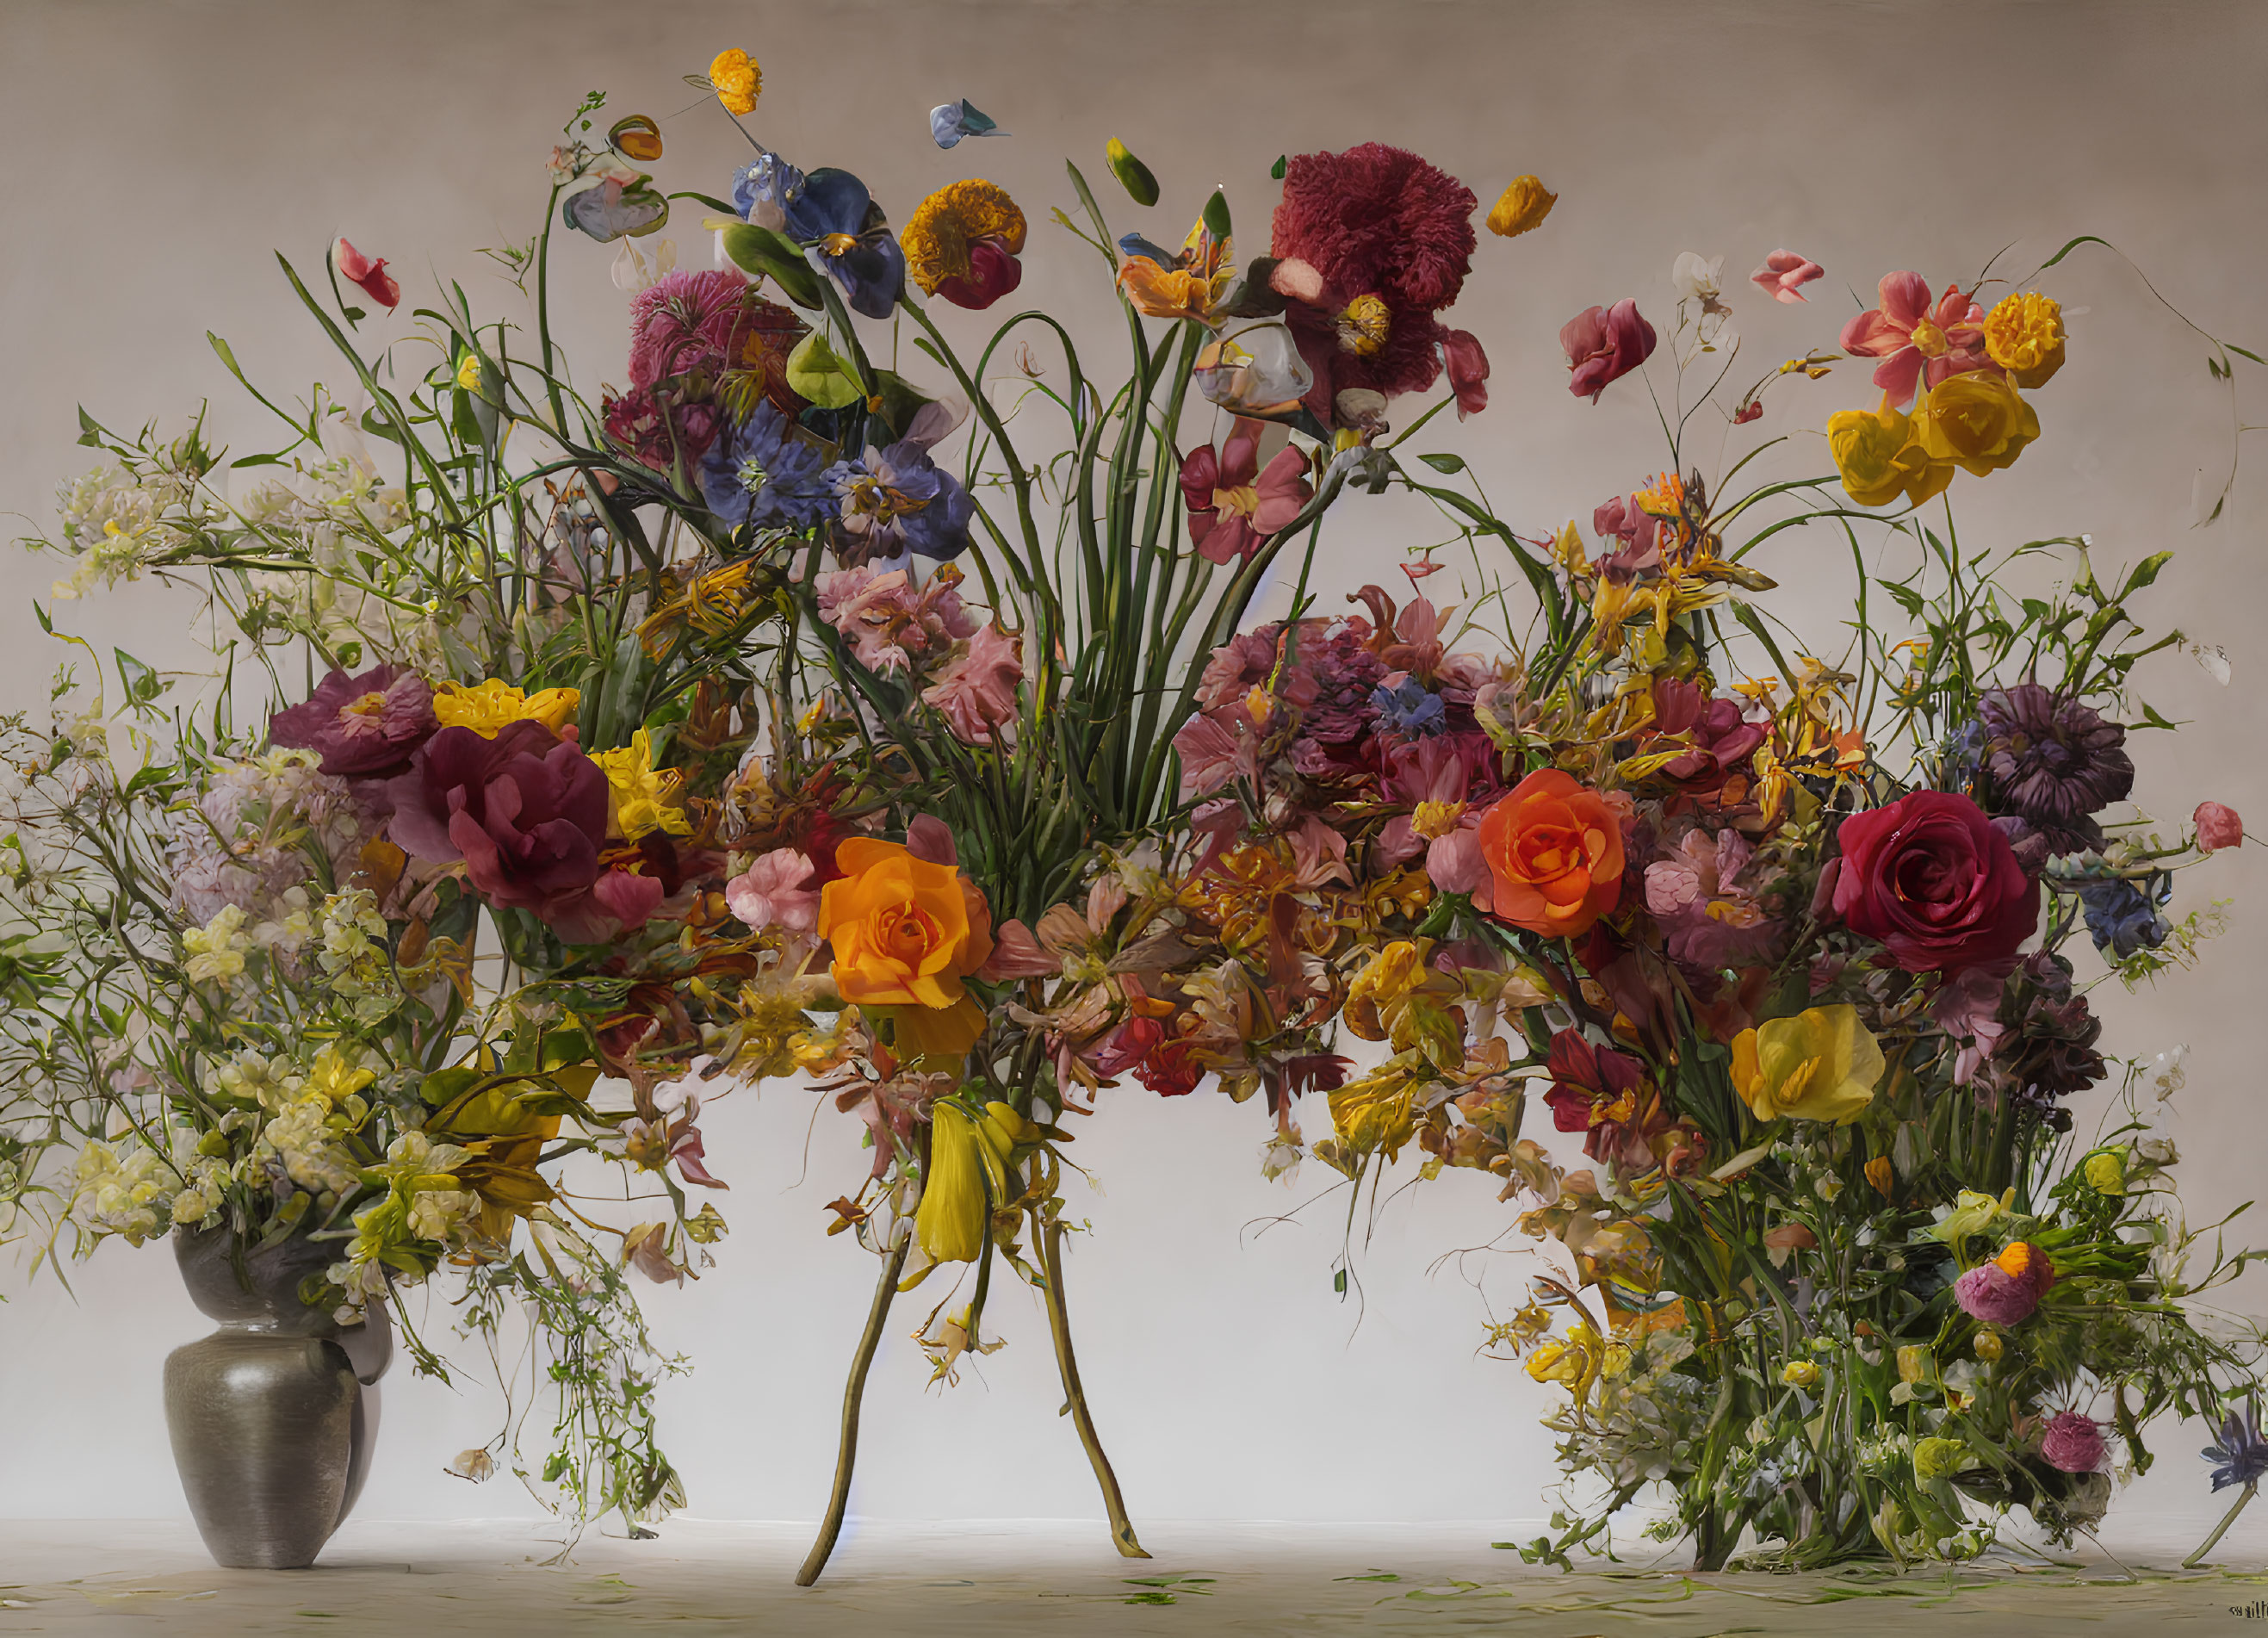 Colorful Flower Arrangement in Vases on Neutral Background